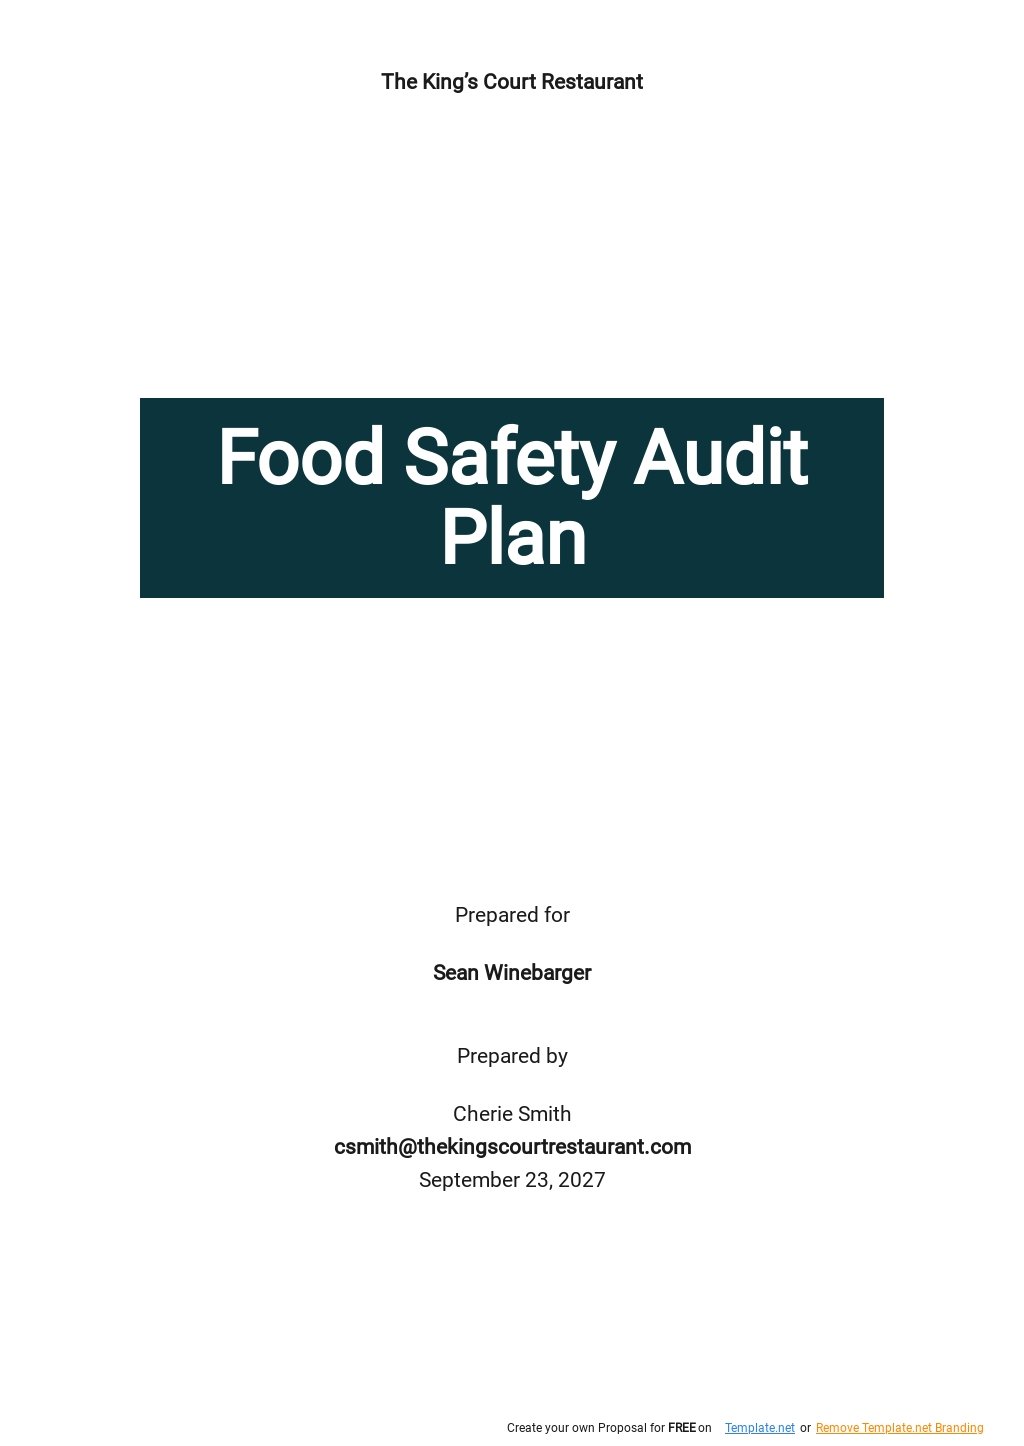 Food Safety Audit Plan Template.jpe